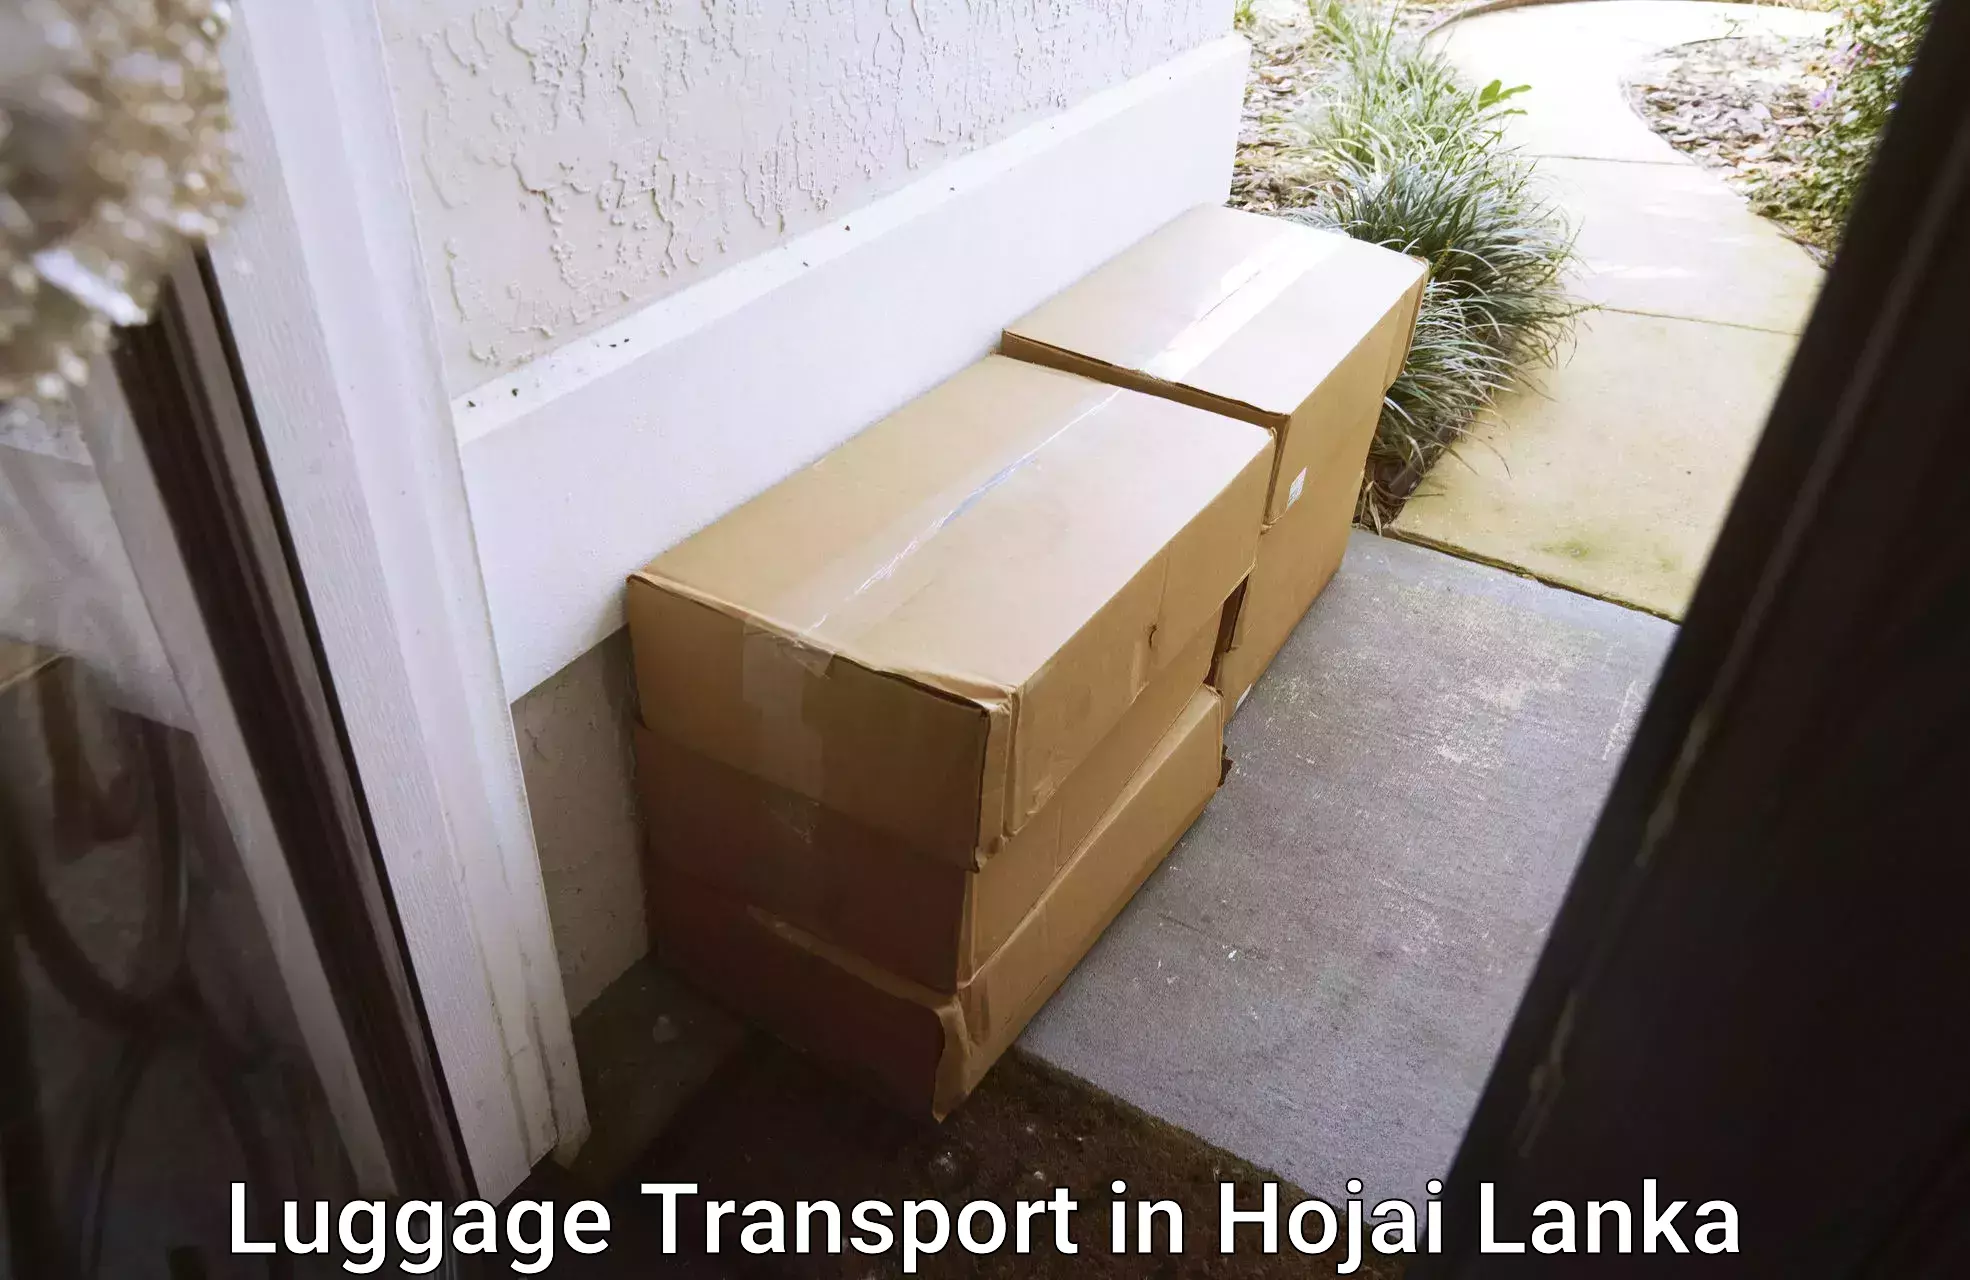 Luggage shipment tracking in Hojai Lanka